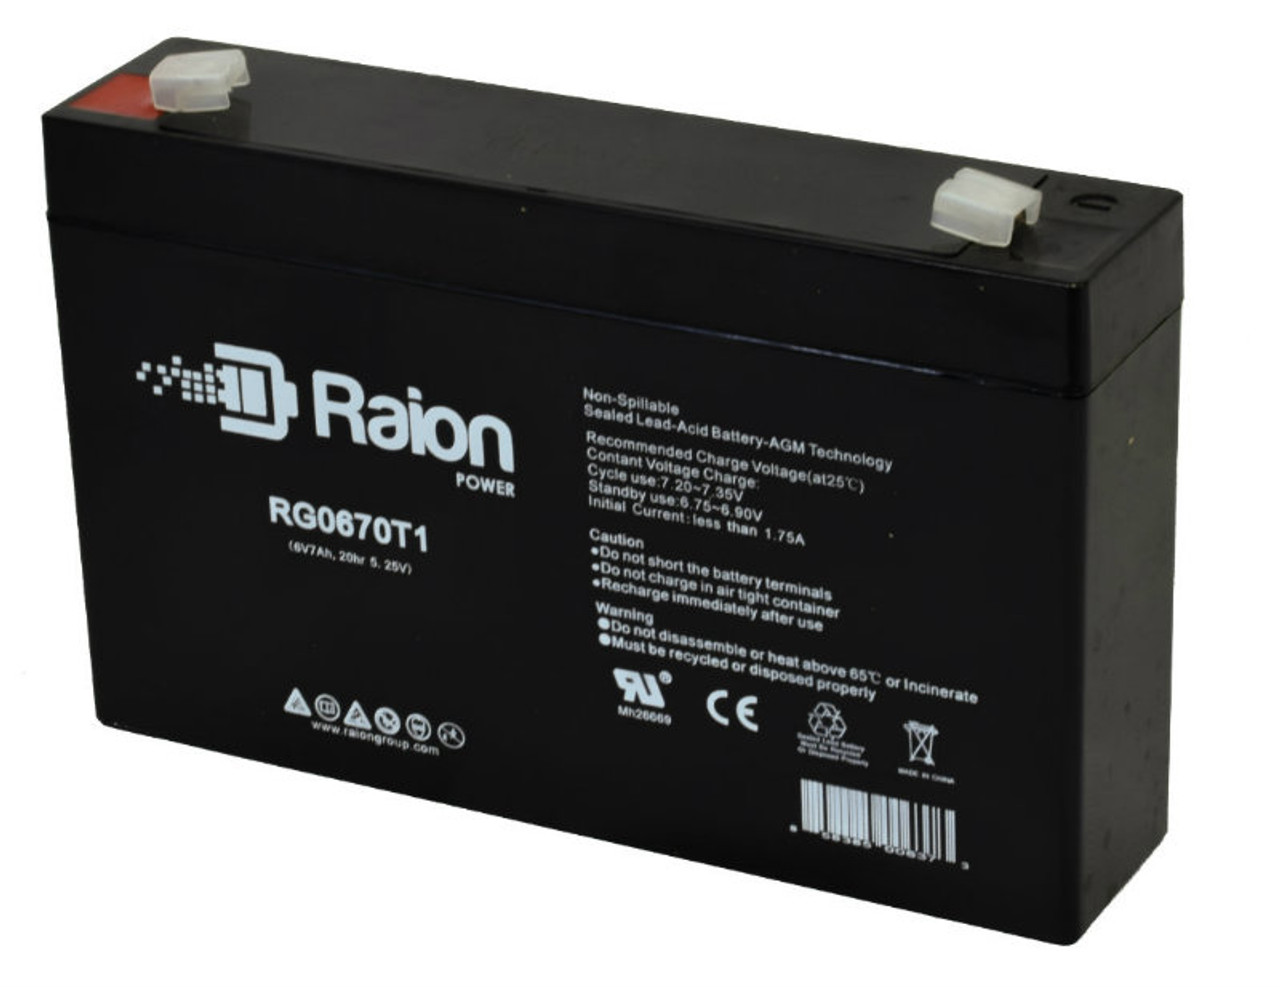 Raion Power RG0670T1 6V 7Ah Replacement Battery Cartridge for Sonnenschein PowerWare PERSONAL